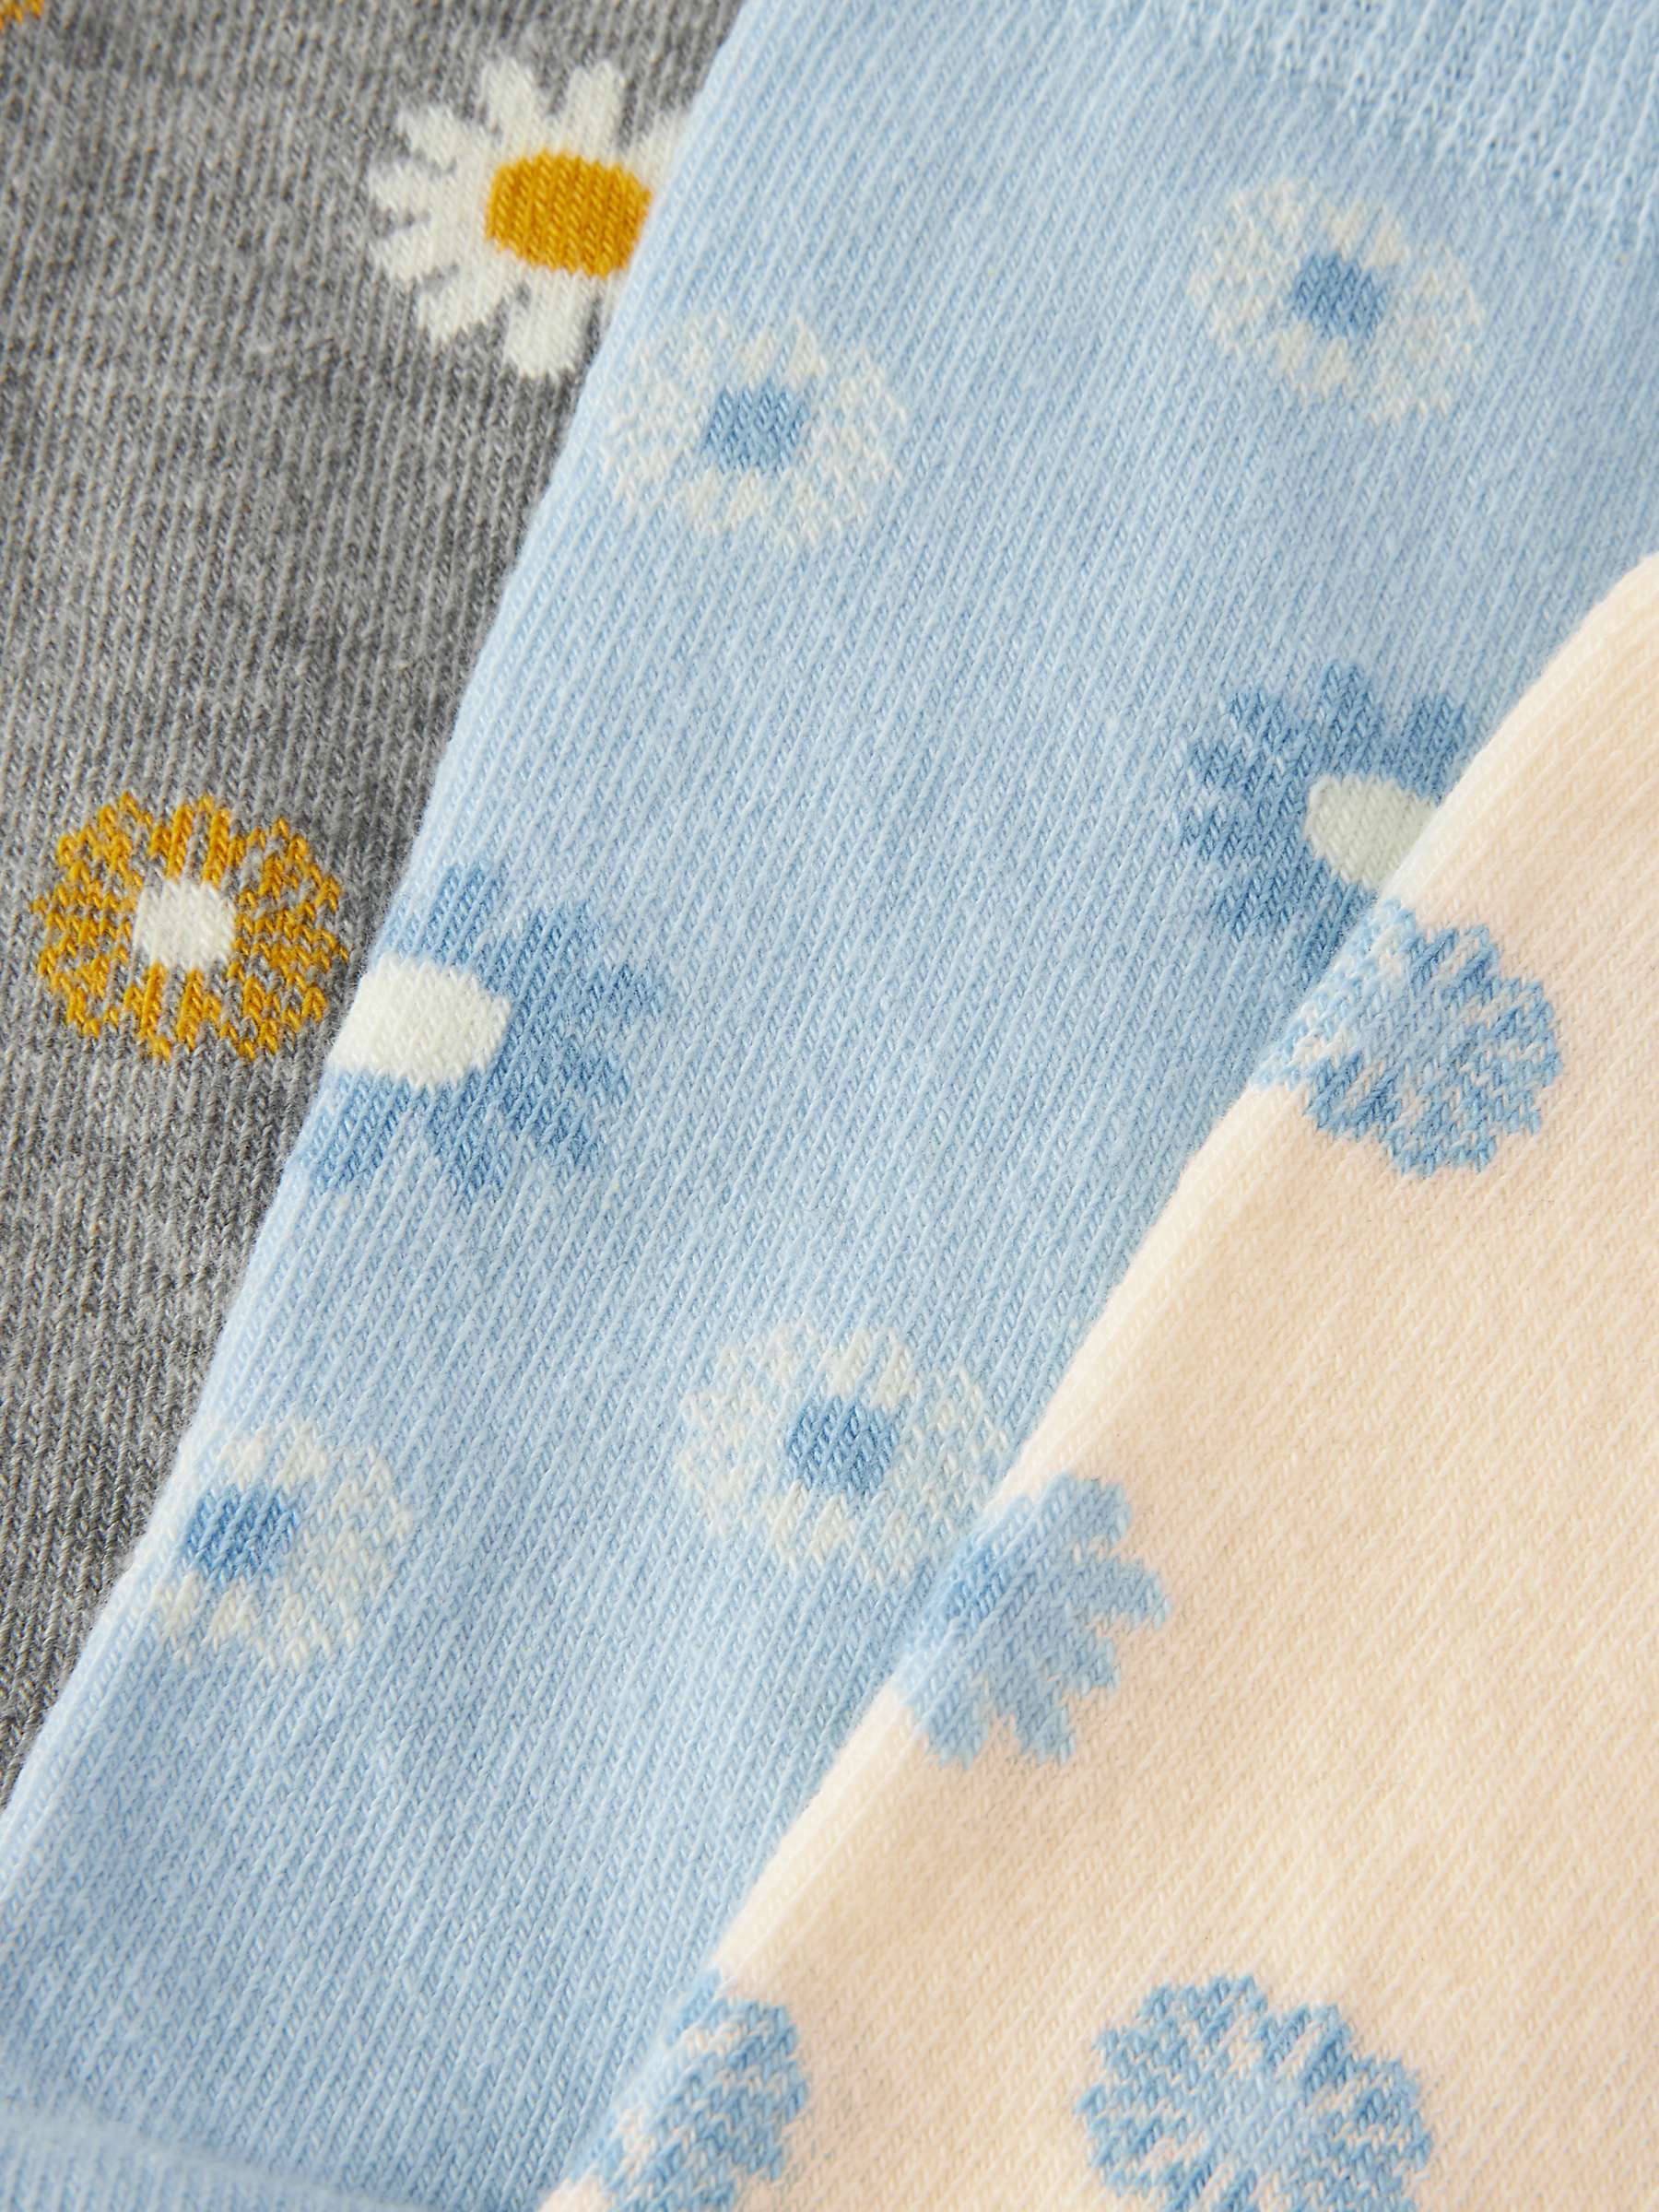 Buy John Lewis Floral Print Cotton Mix Ankle Socks, Pack of 3, Blue/Multi Online at johnlewis.com